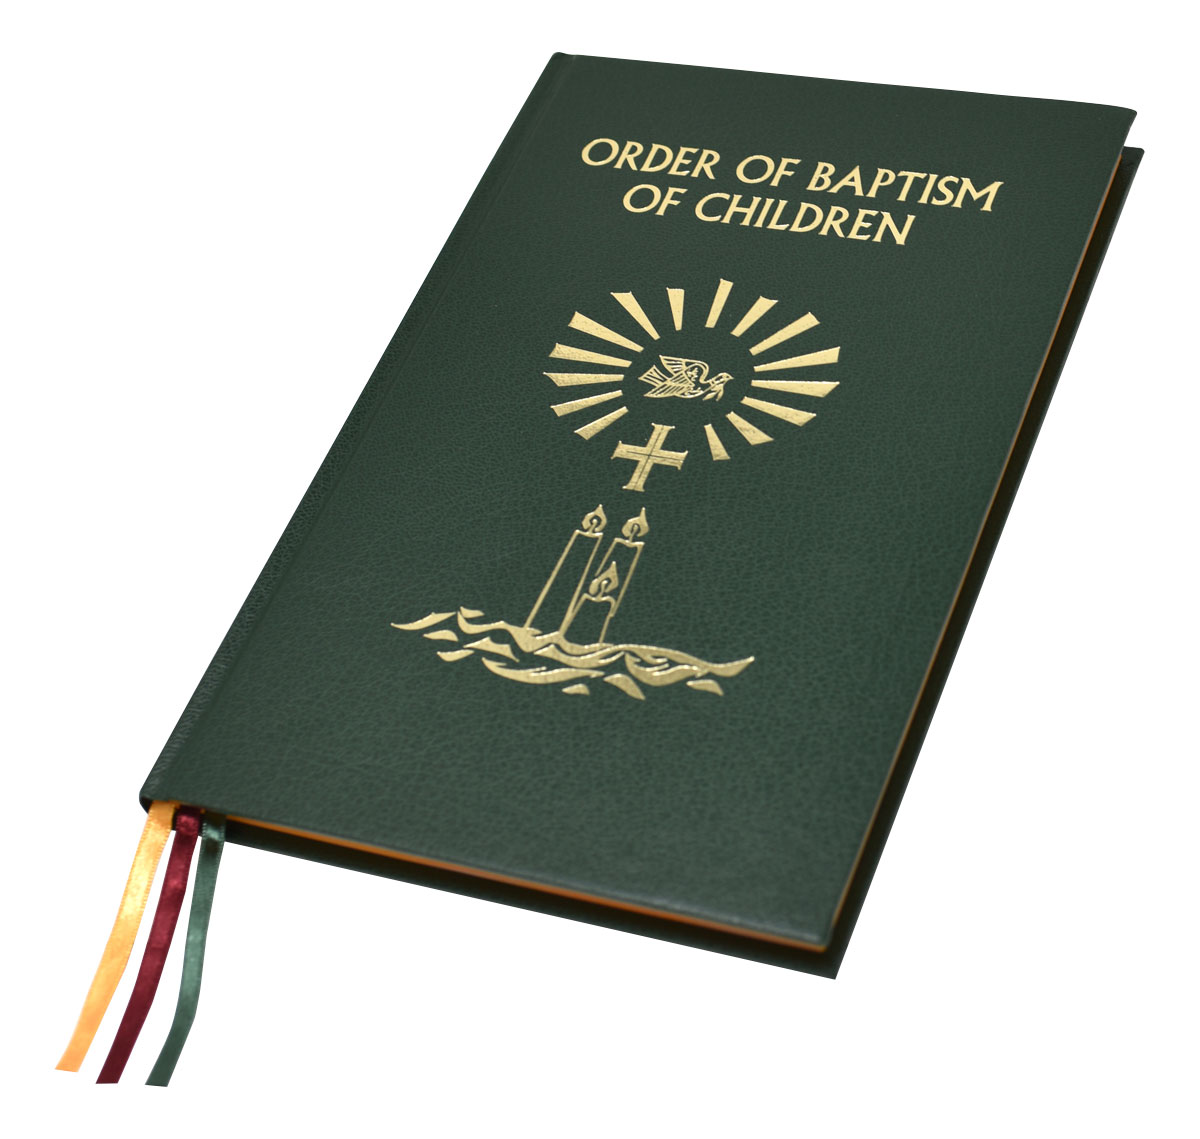 Order of Baptism For Children #136-22